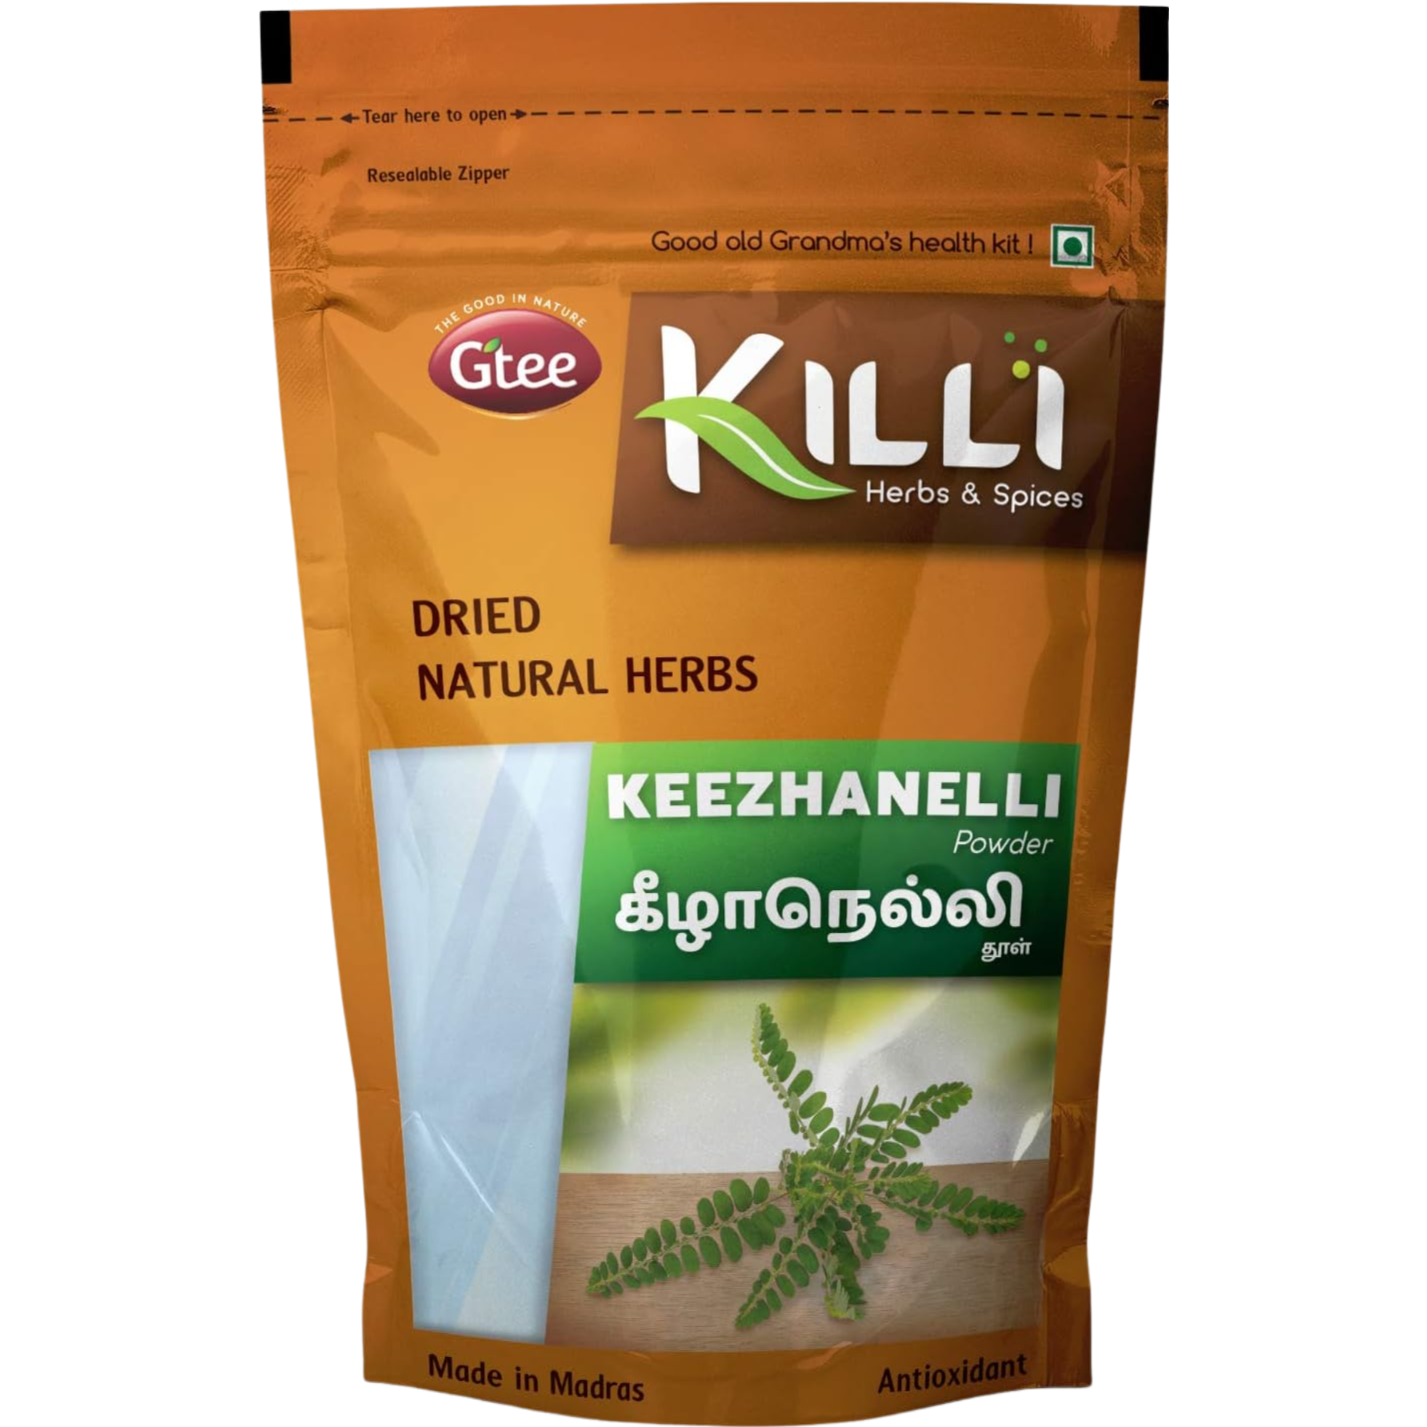 Case of 1 - Gtee Killi Keezhanelli Powder Natural Herb - 100 Gm (3.5 Oz)